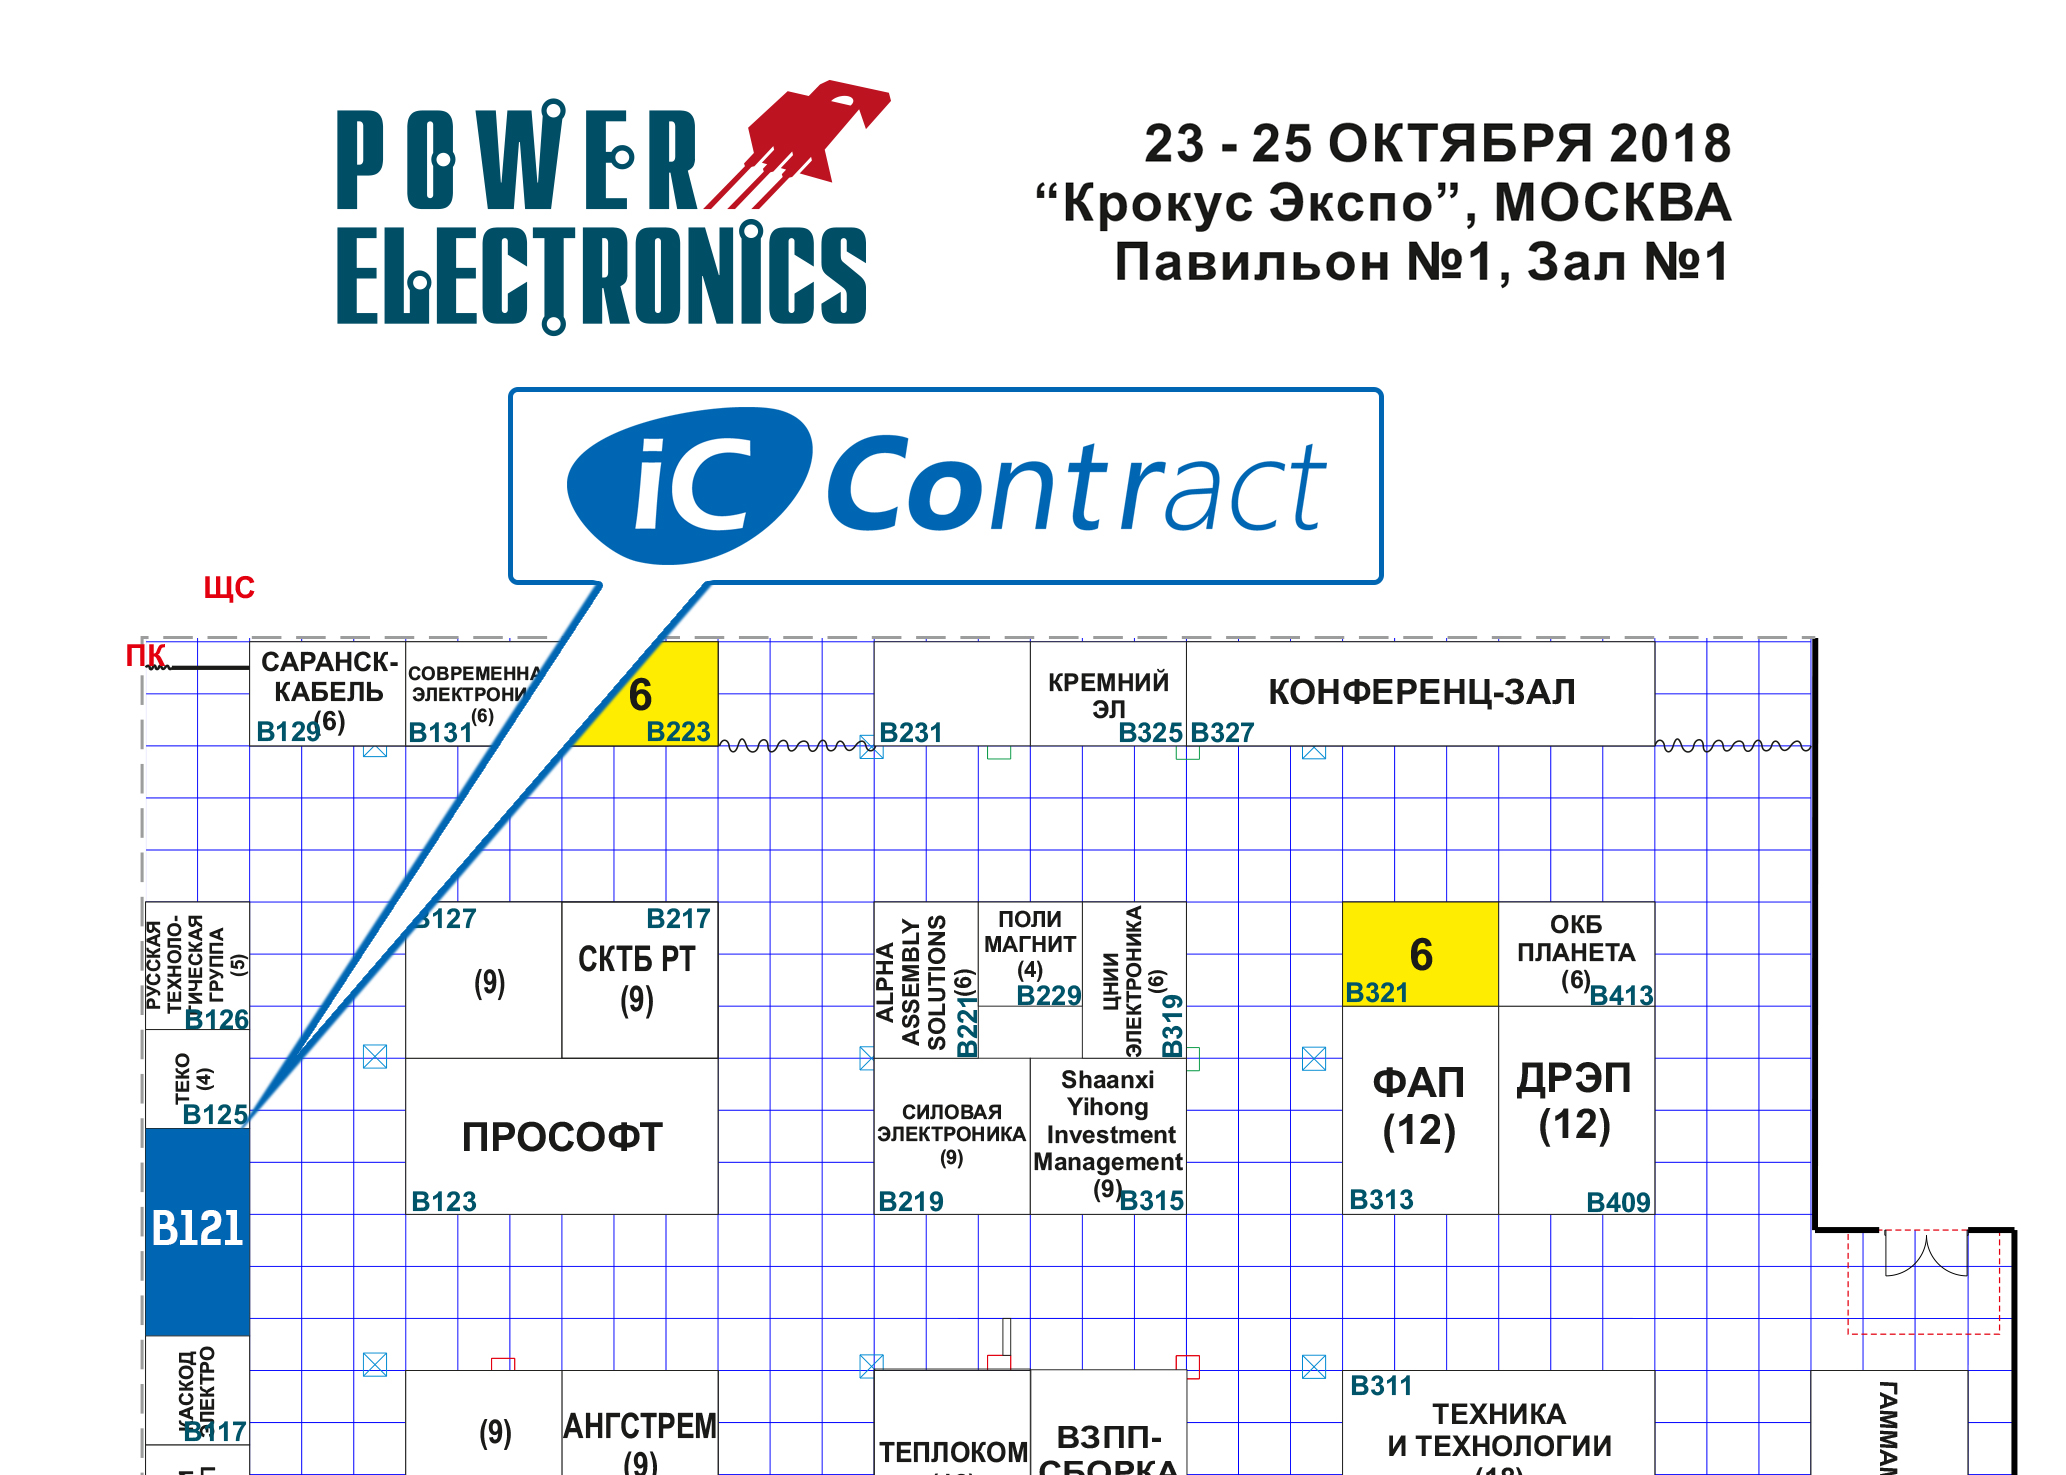 PowerElectronics 2018 hall 1